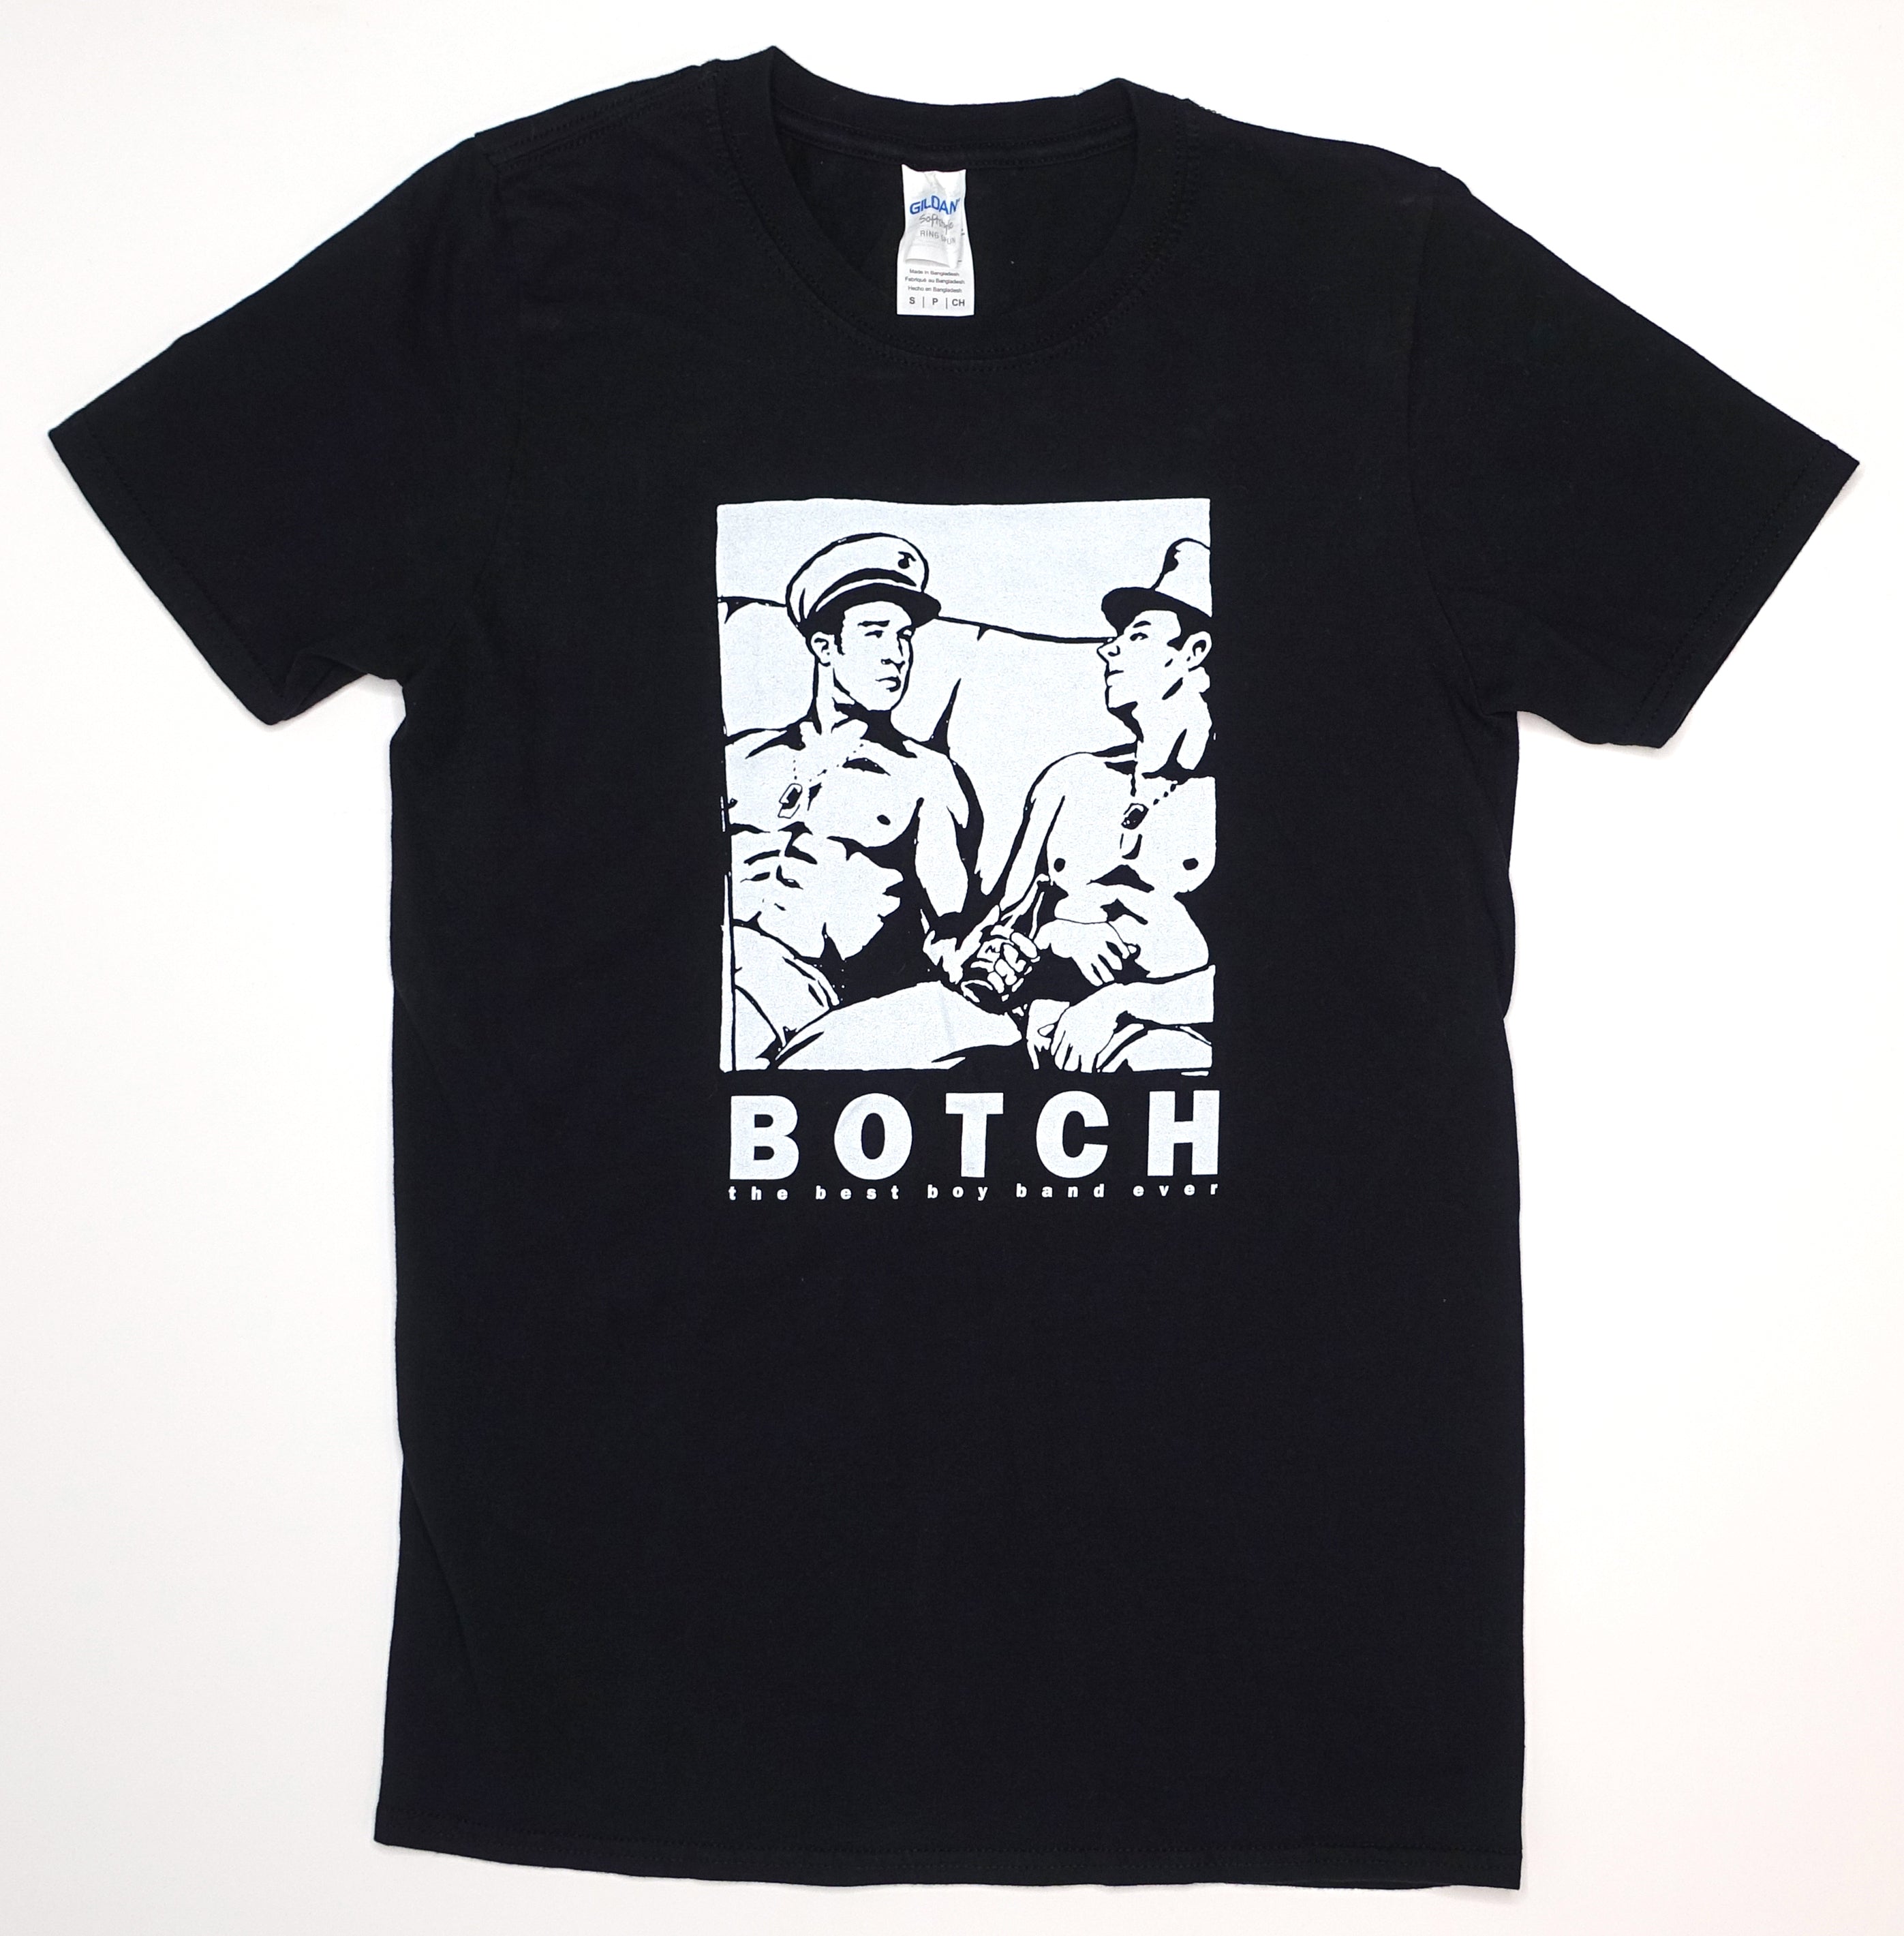 Botch - The Best Boy Band Ever Tour Shirt Size Small